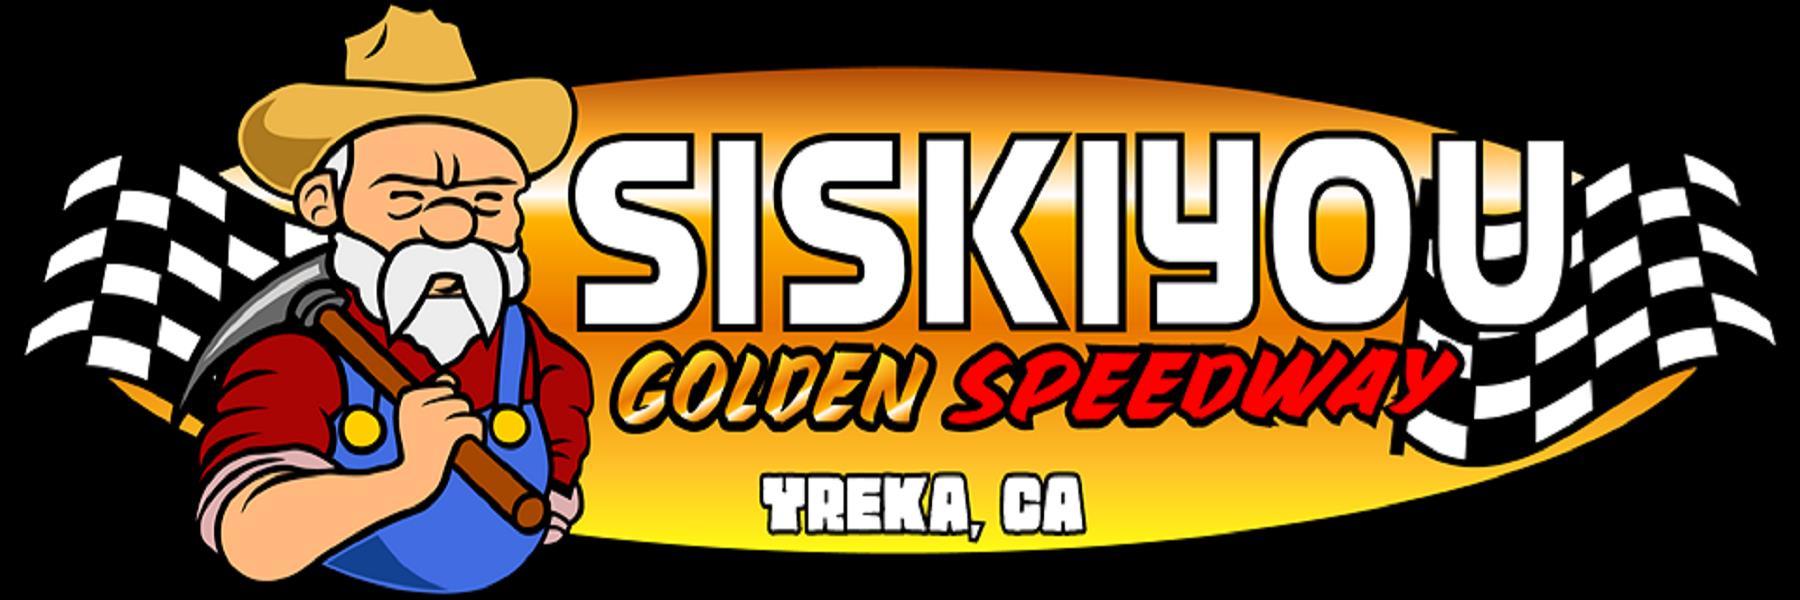 6/10/2022 - Siskiyou Golden Speedway